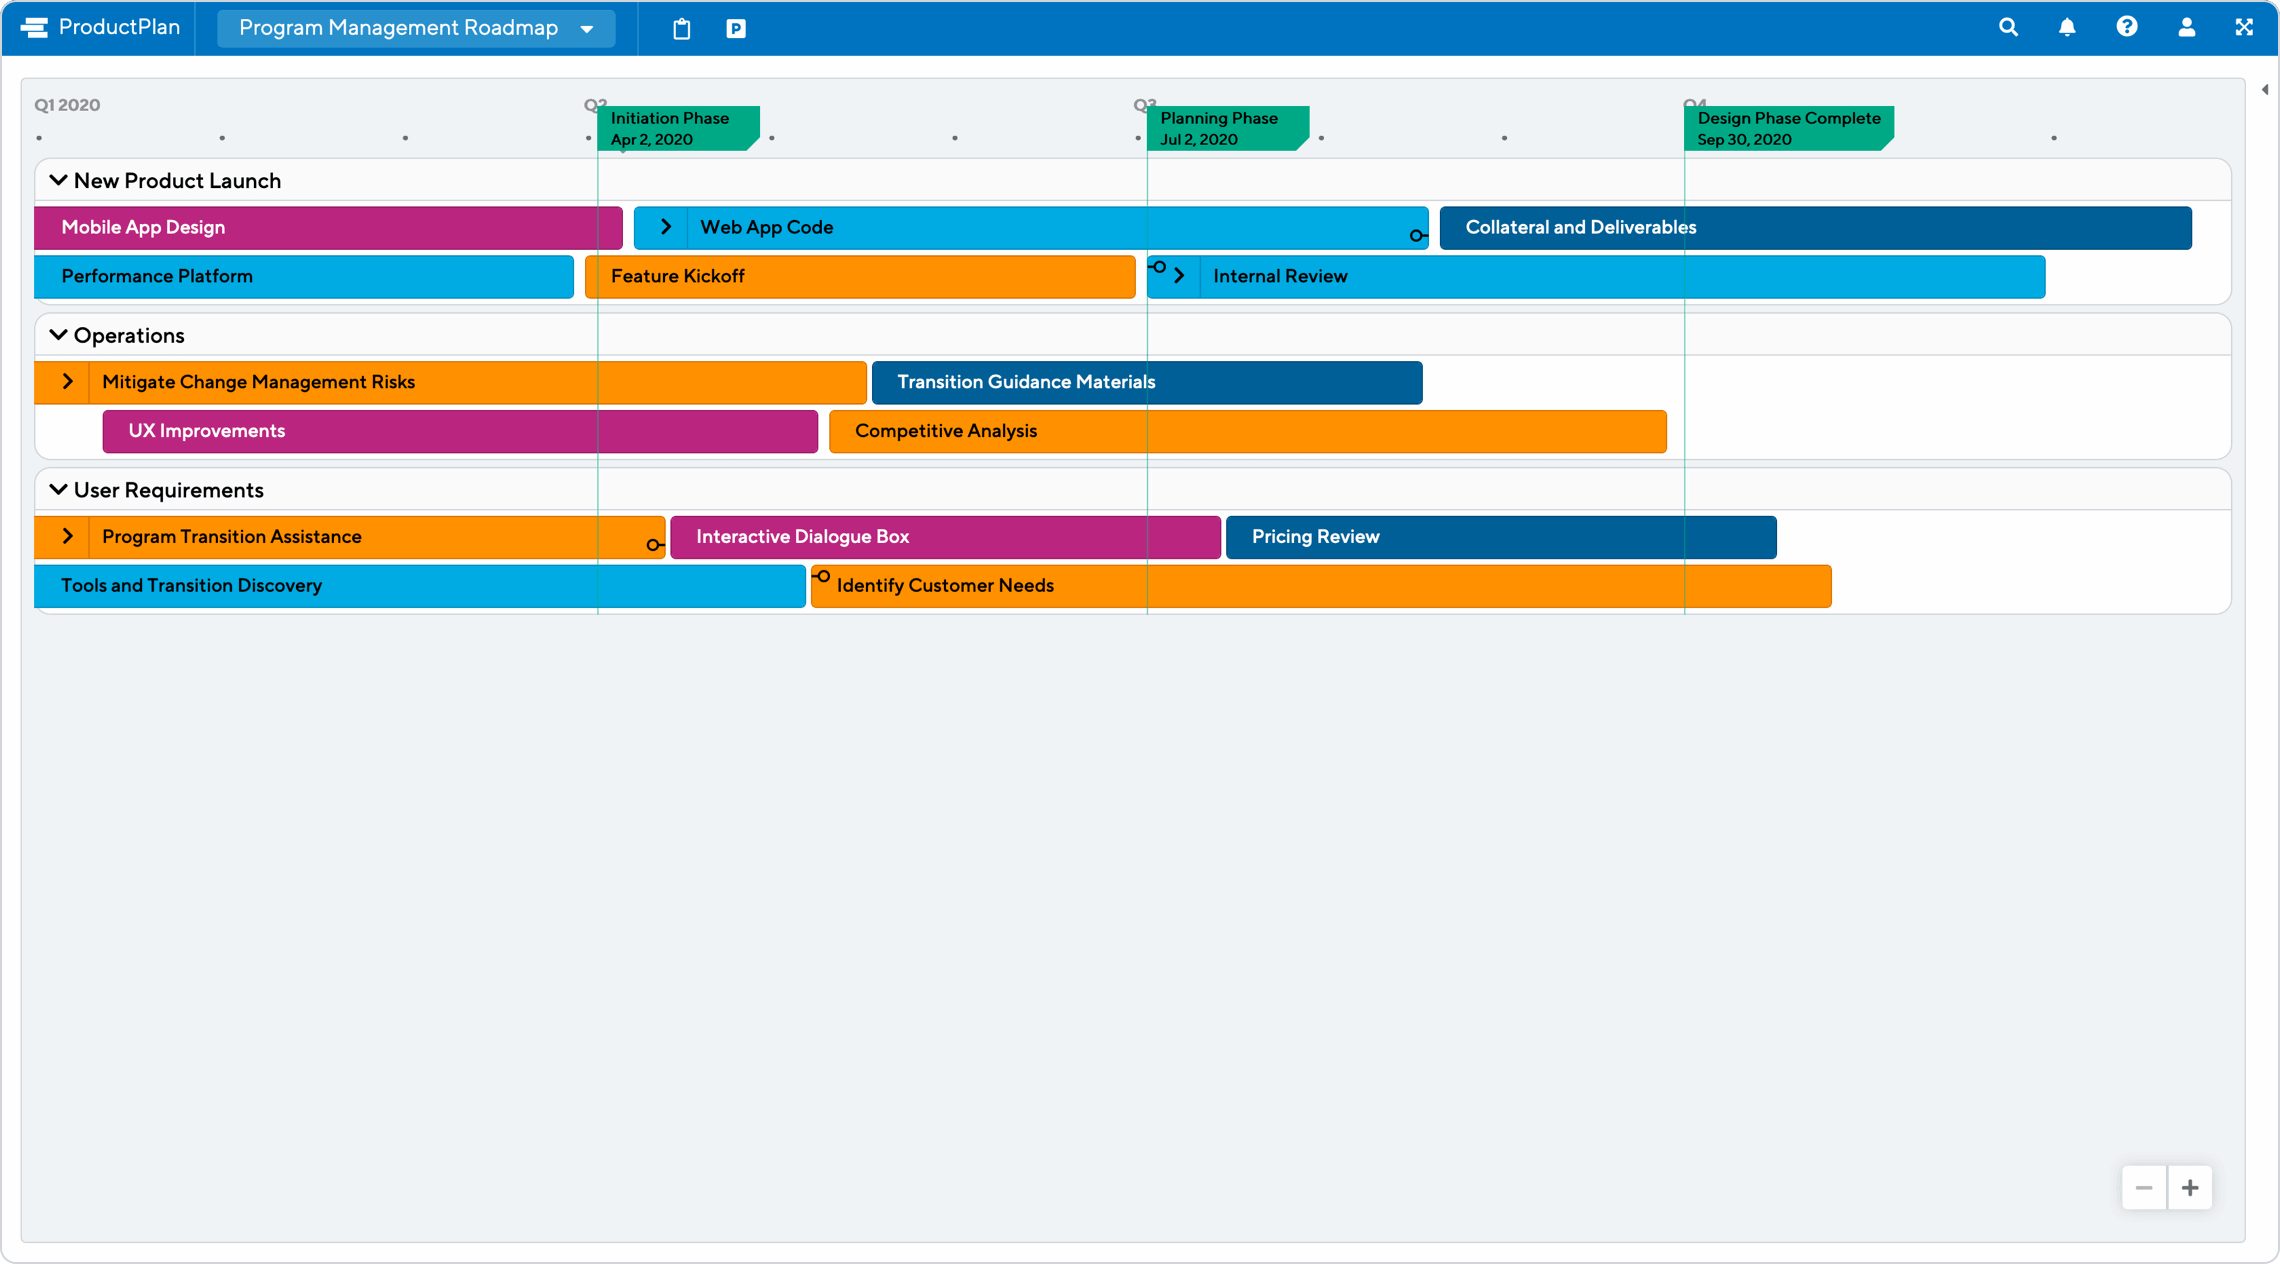 Program Management Roadmap Template by ProductPlan